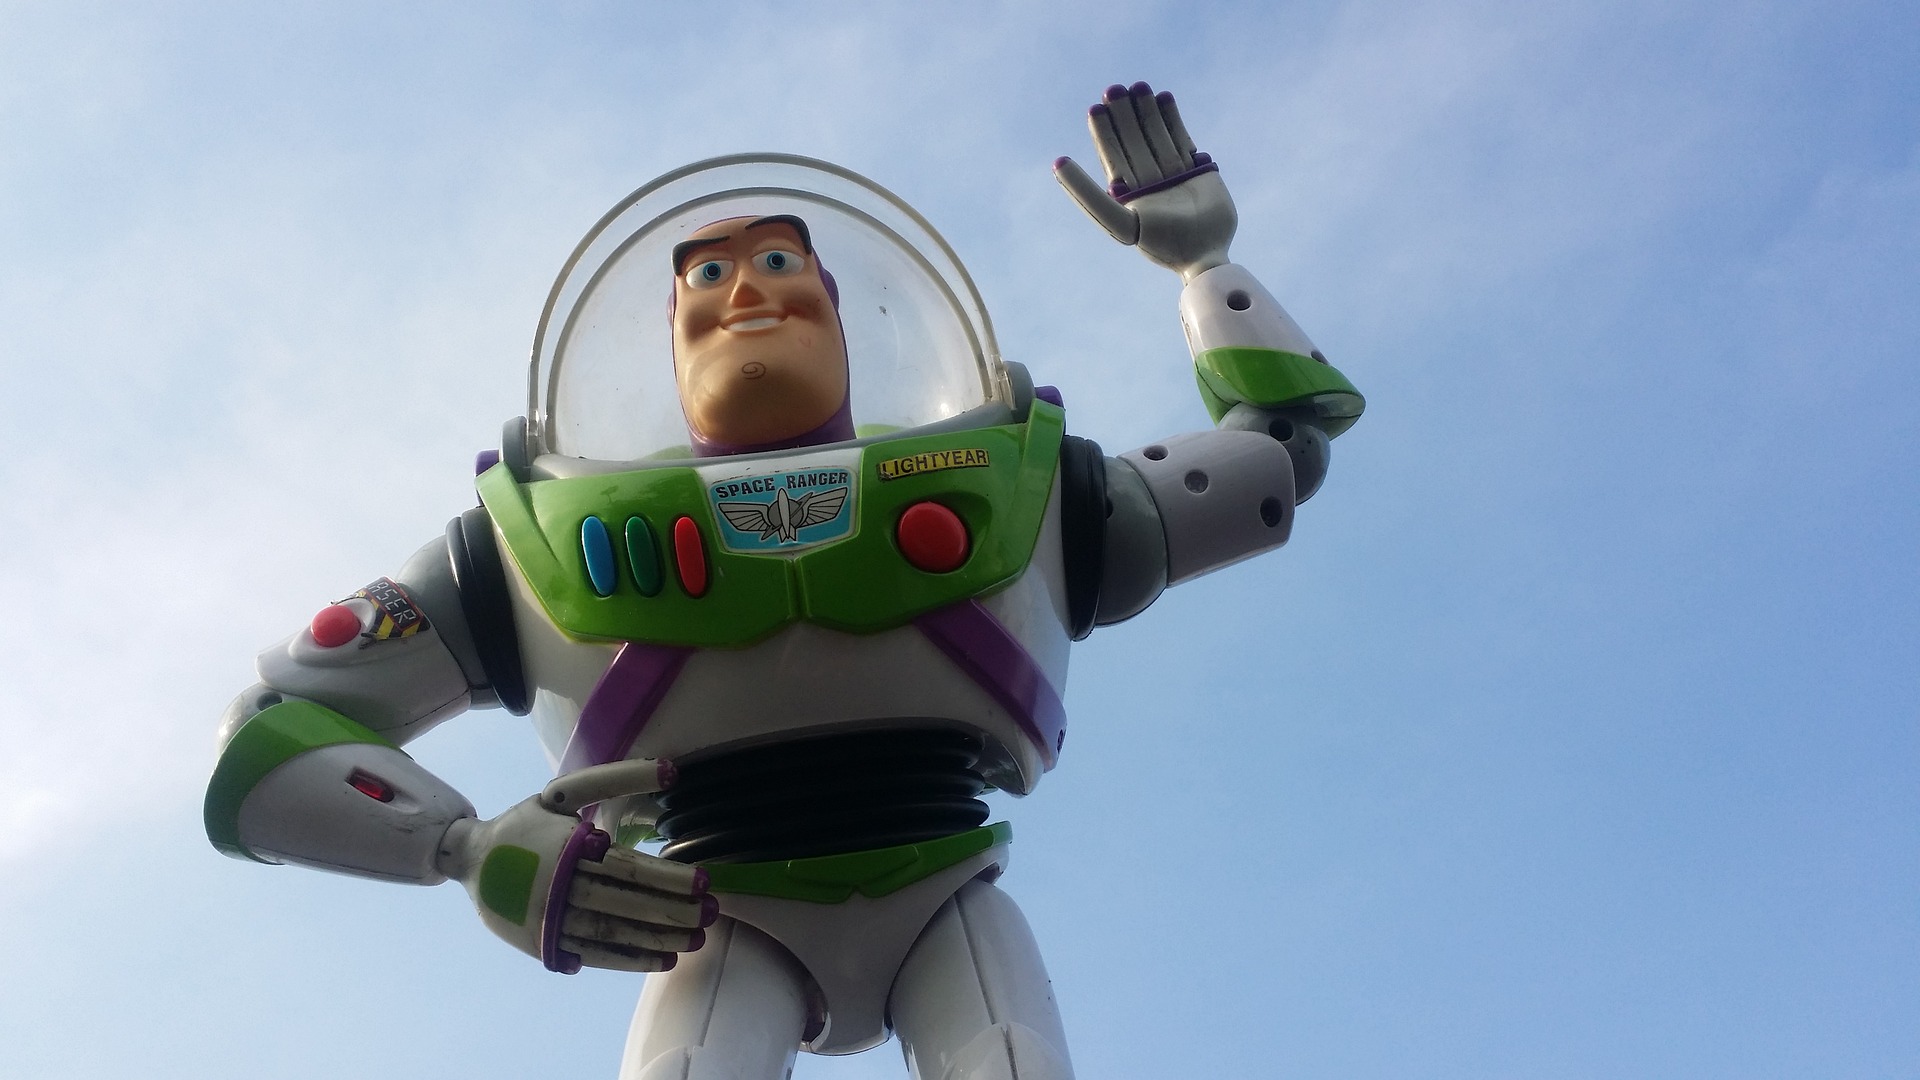 En ce moment, Toy Story s'invite chez Picwic...